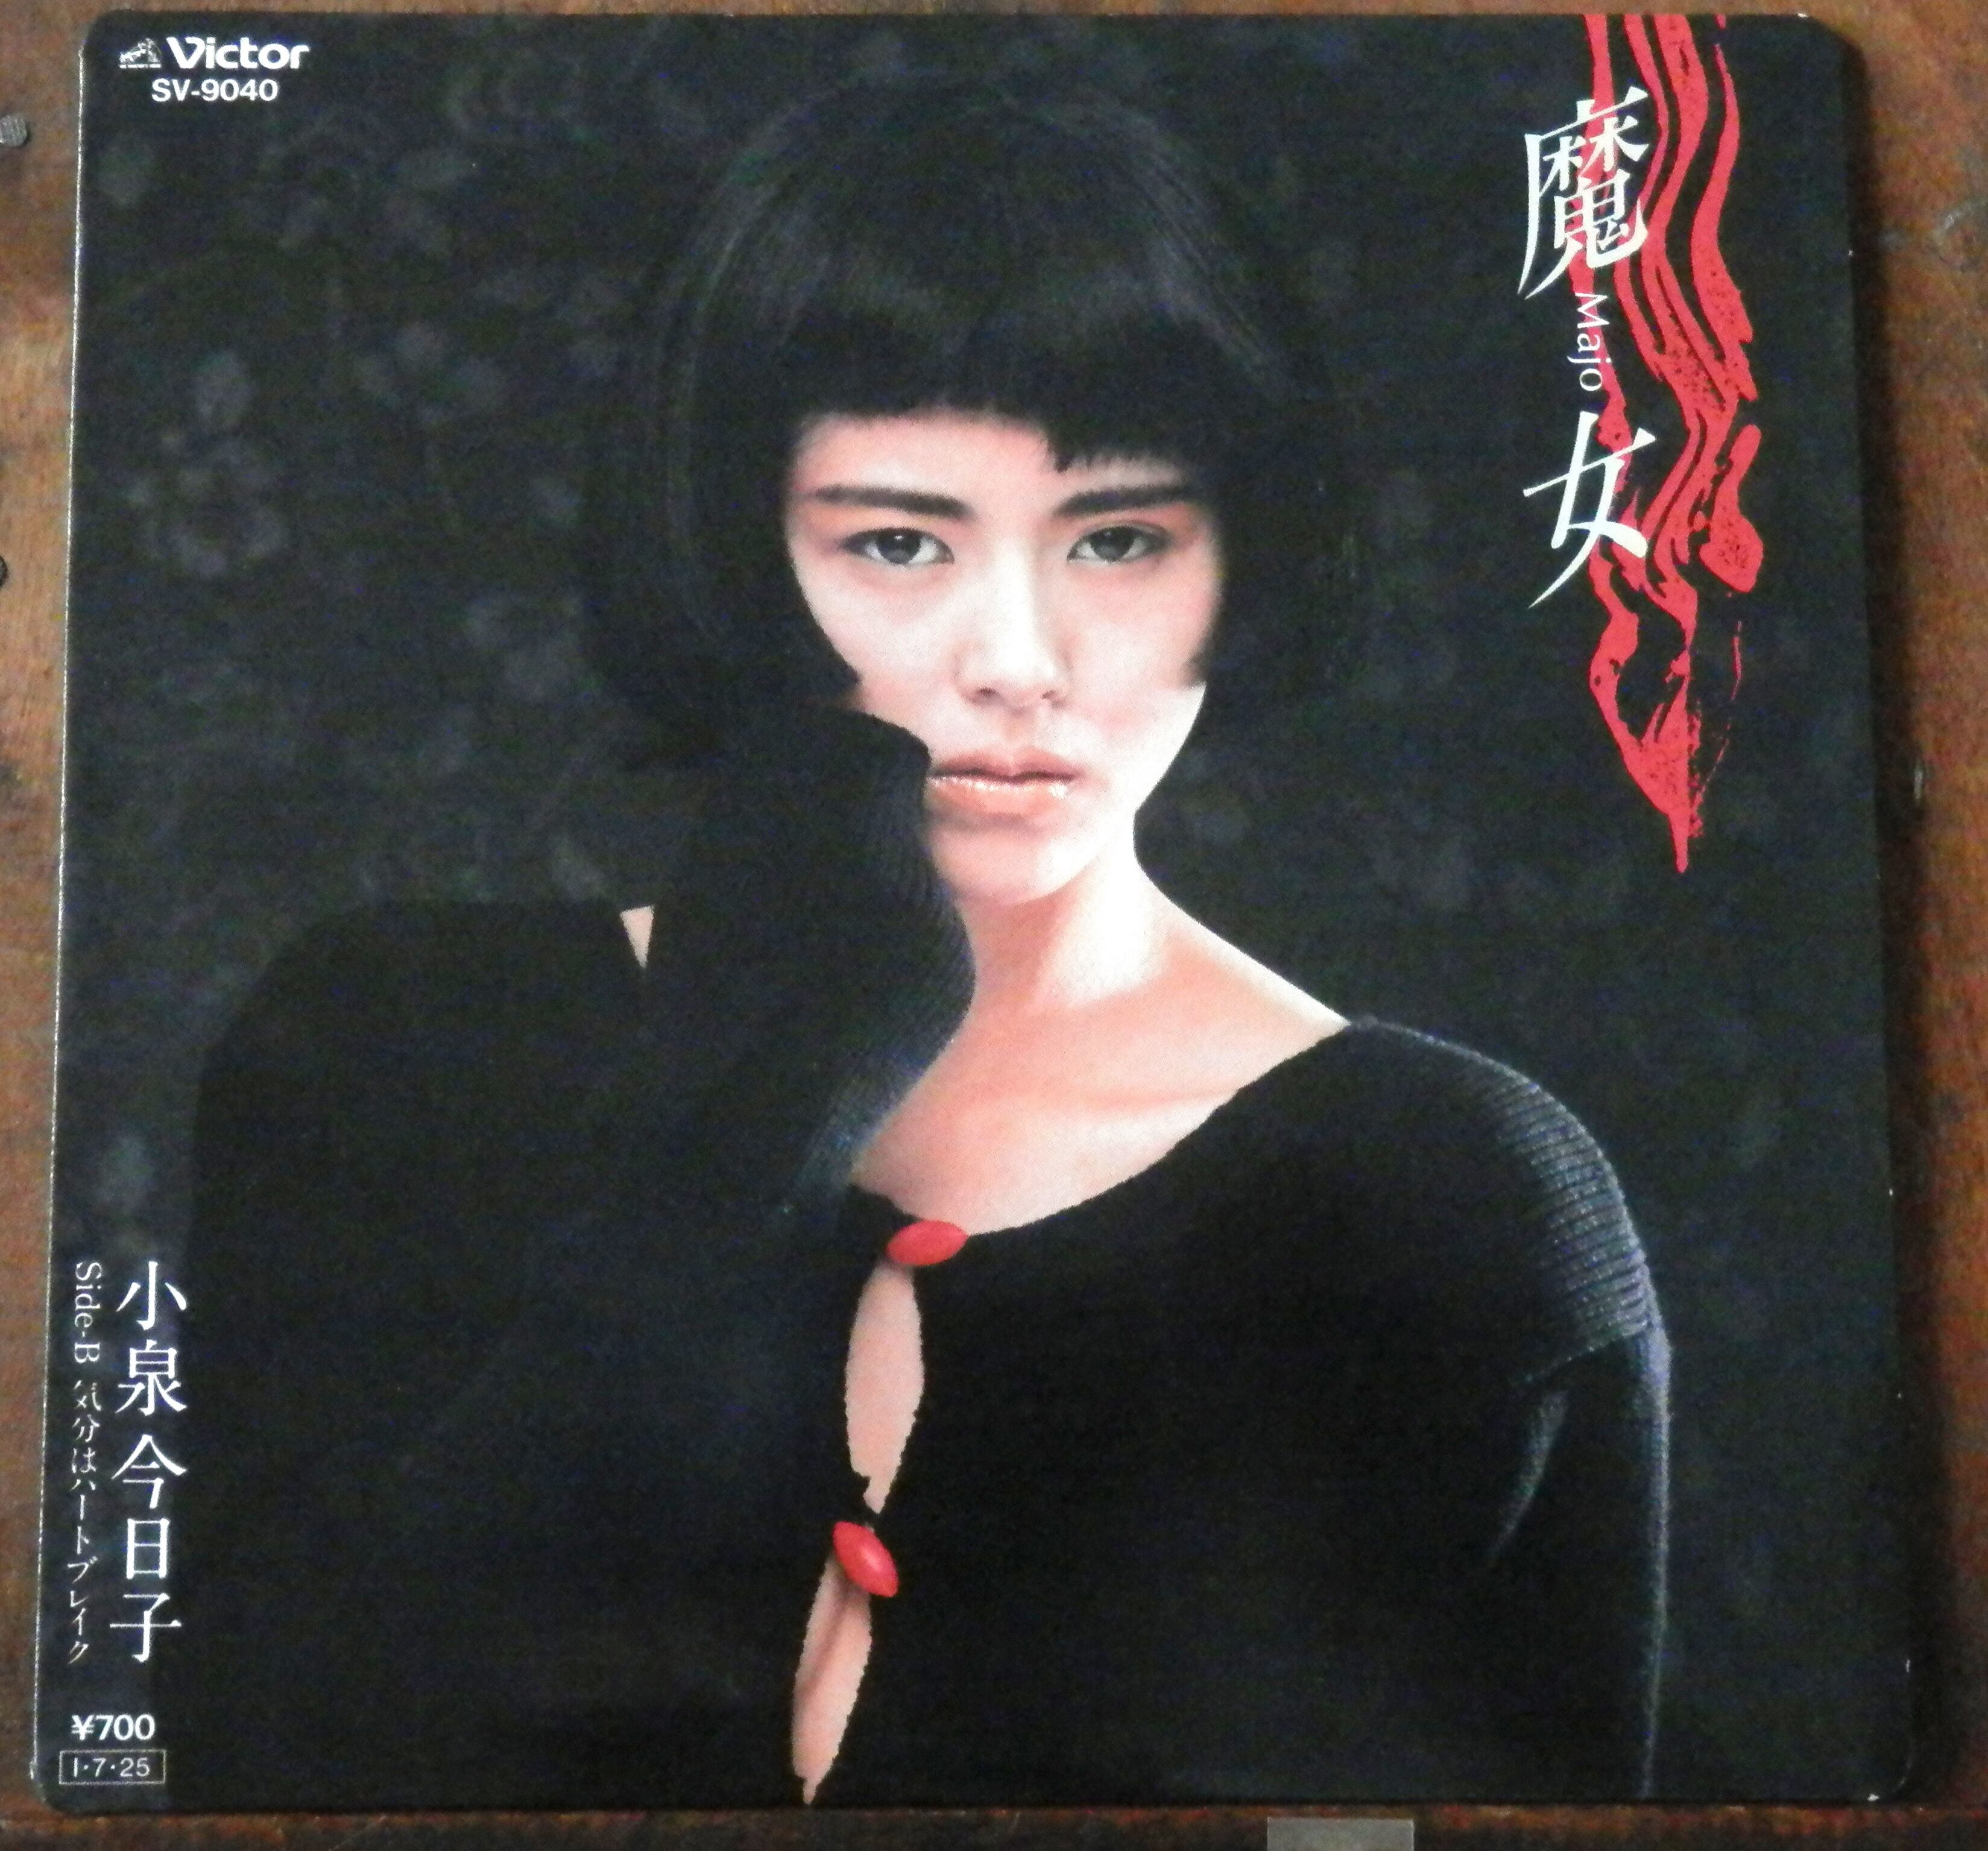 '85【EP】小泉今日子 魔女 *松本隆/筒美京平 *初回セミハード 音盤窟レコード